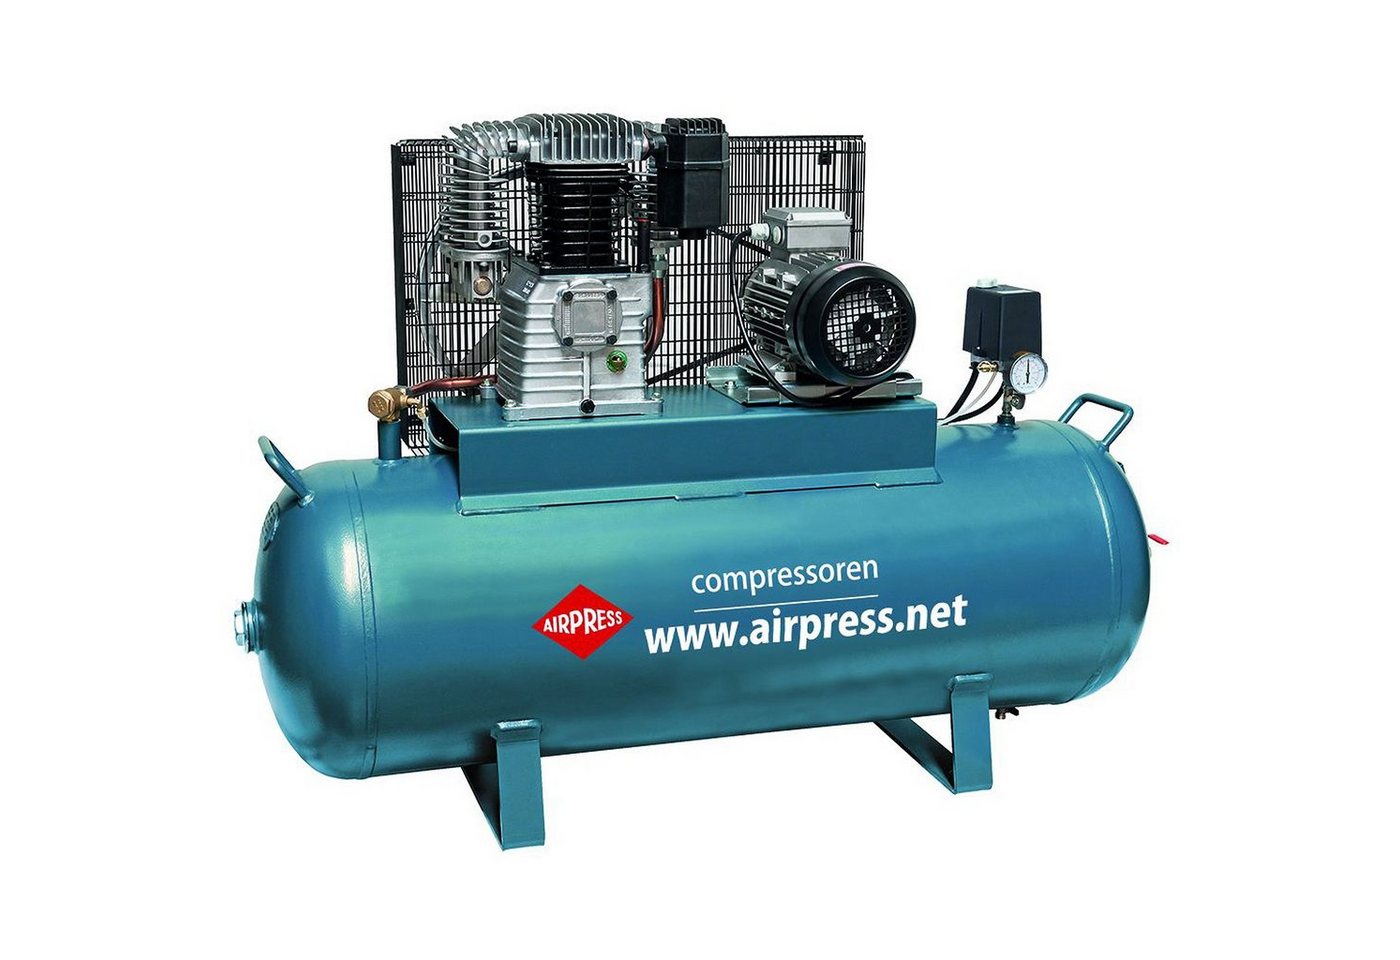 Airpress Kompressor Kompressor 4 PS 200 Liter 15 bar Typ K200-600 36500-N, max. 14 bar, 200 l, 1 Stück von Airpress